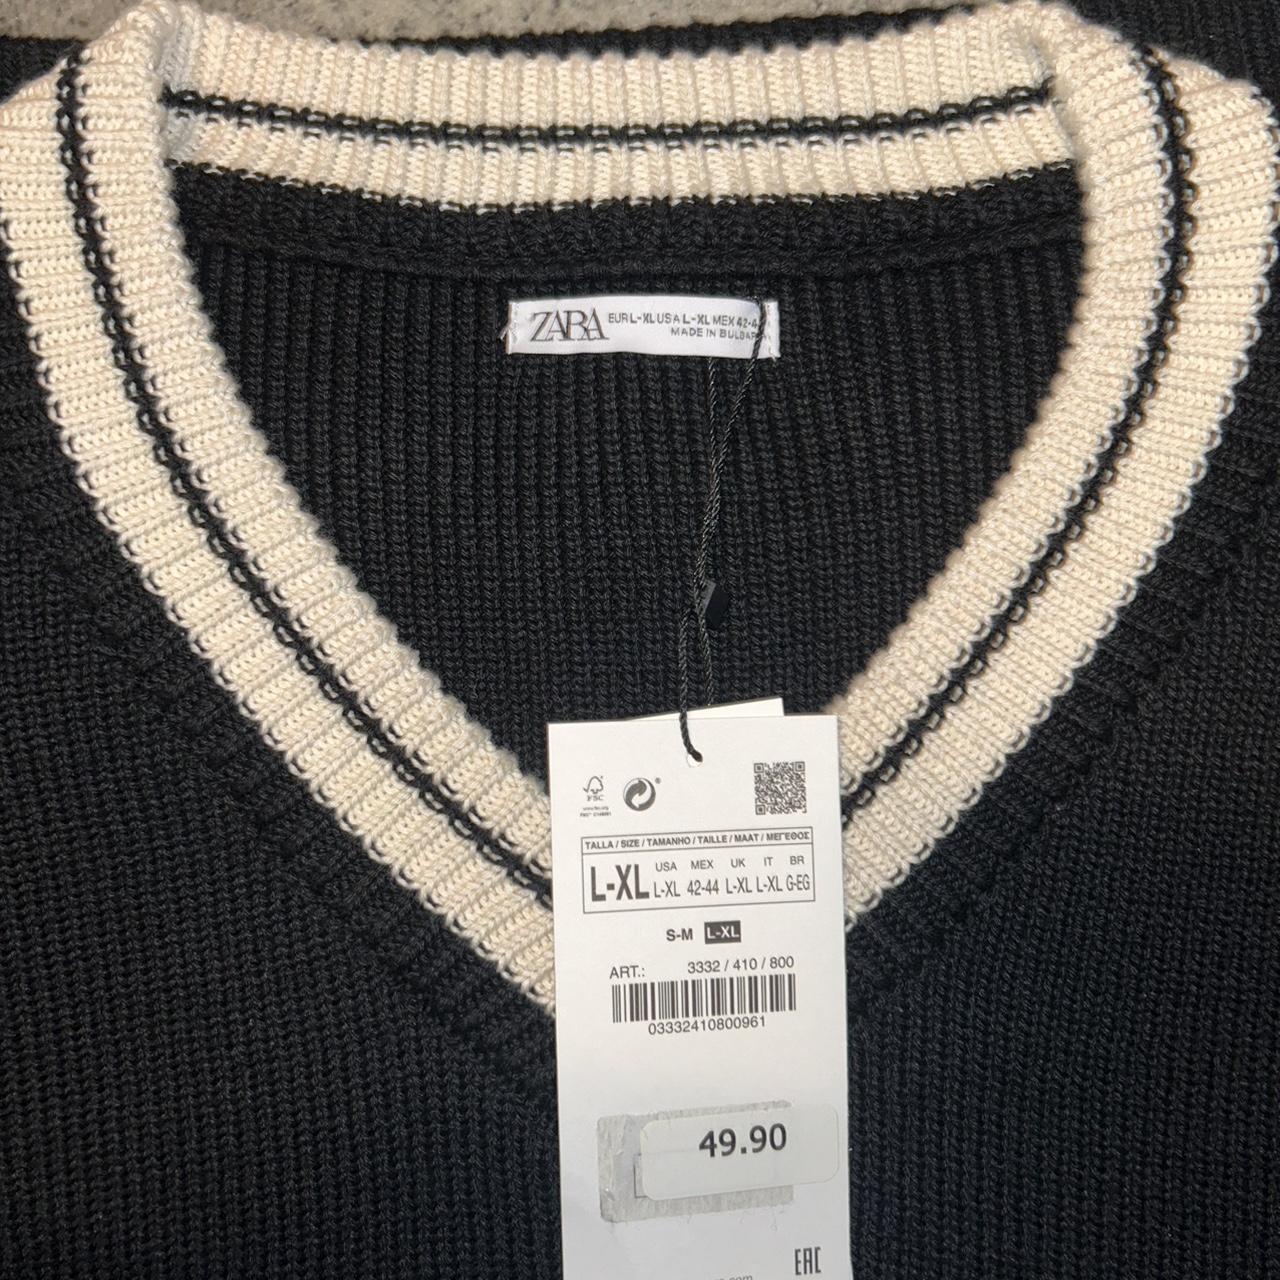 L/XL Zara Men’s Knit Sweater Never worn tags on. - Depop